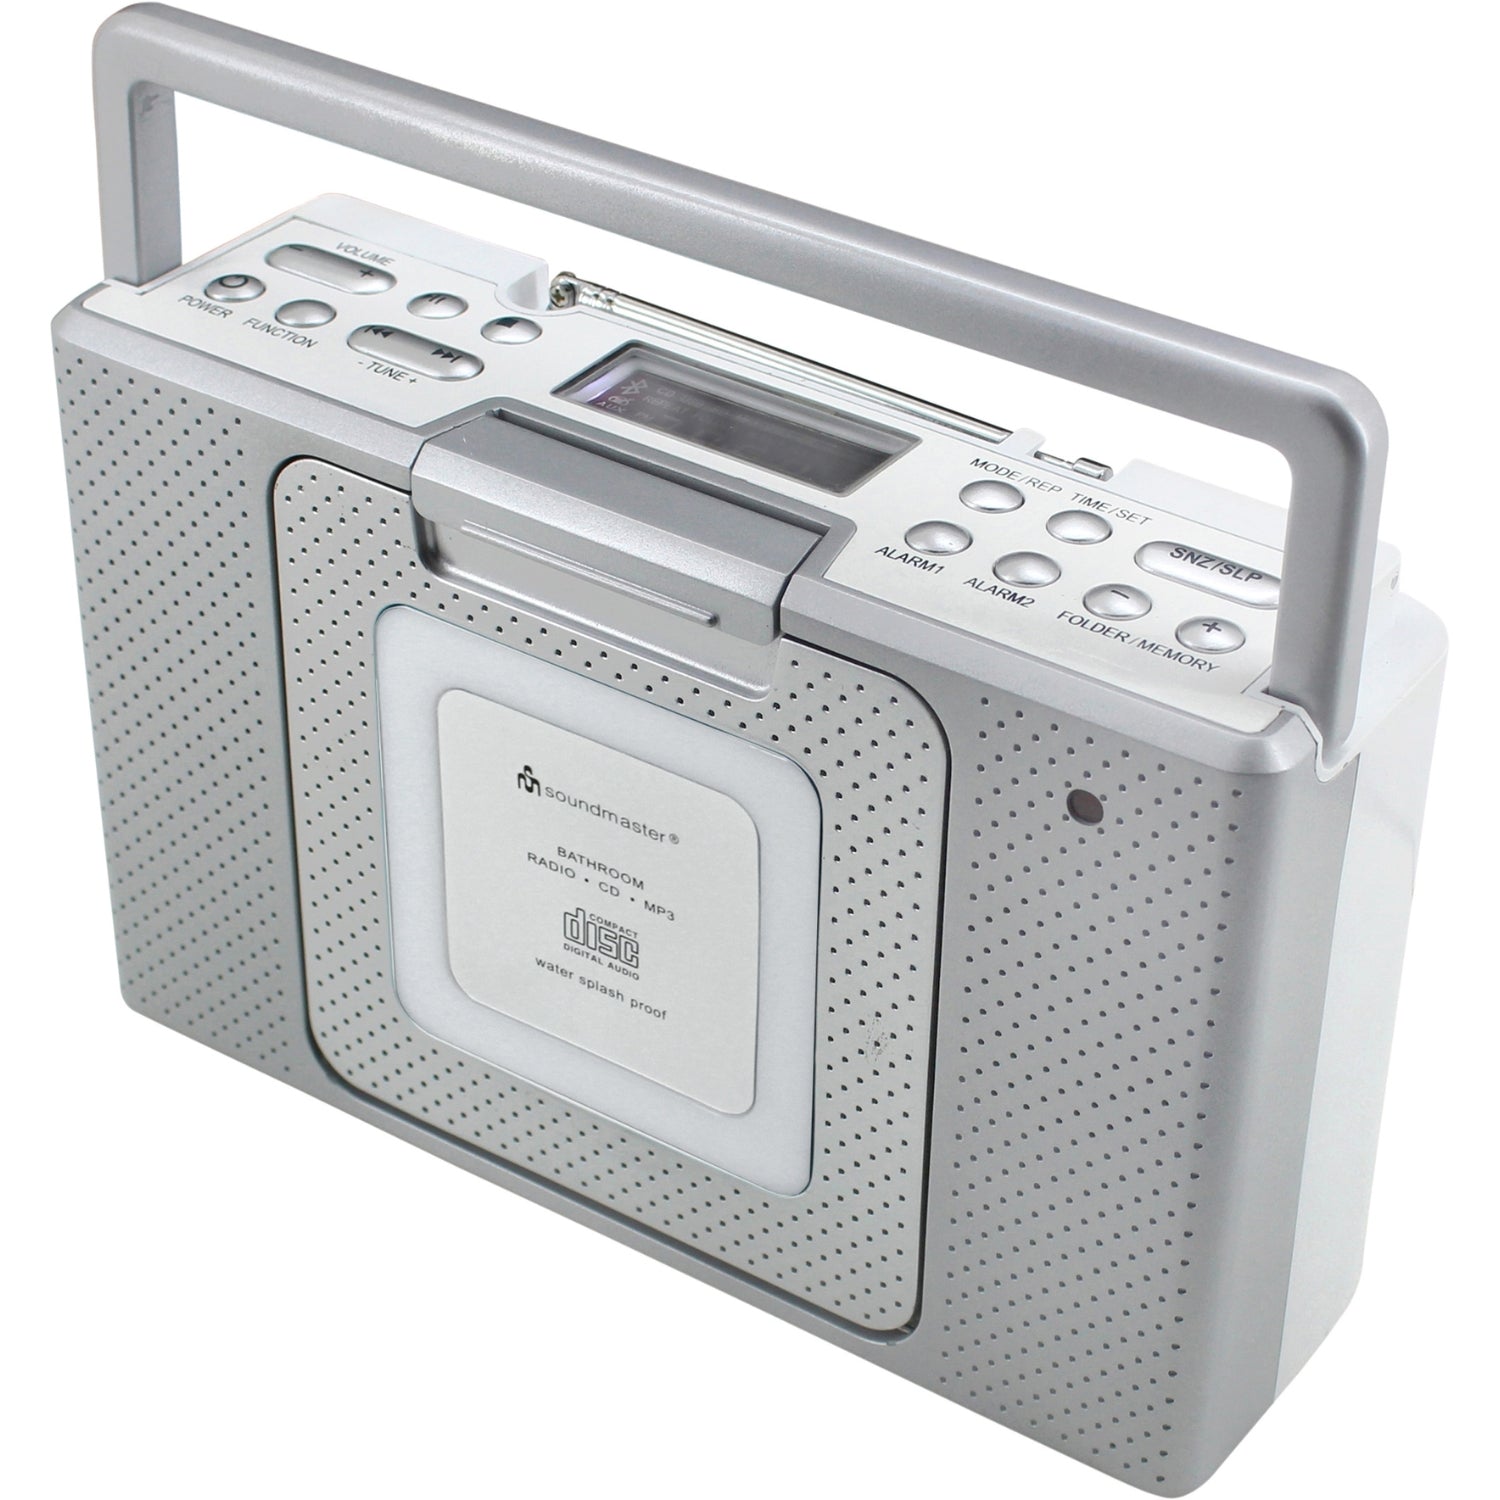 Soundmaster BCD480 bathroom radio kitchen radio CD player clock IPX4 splash-proof